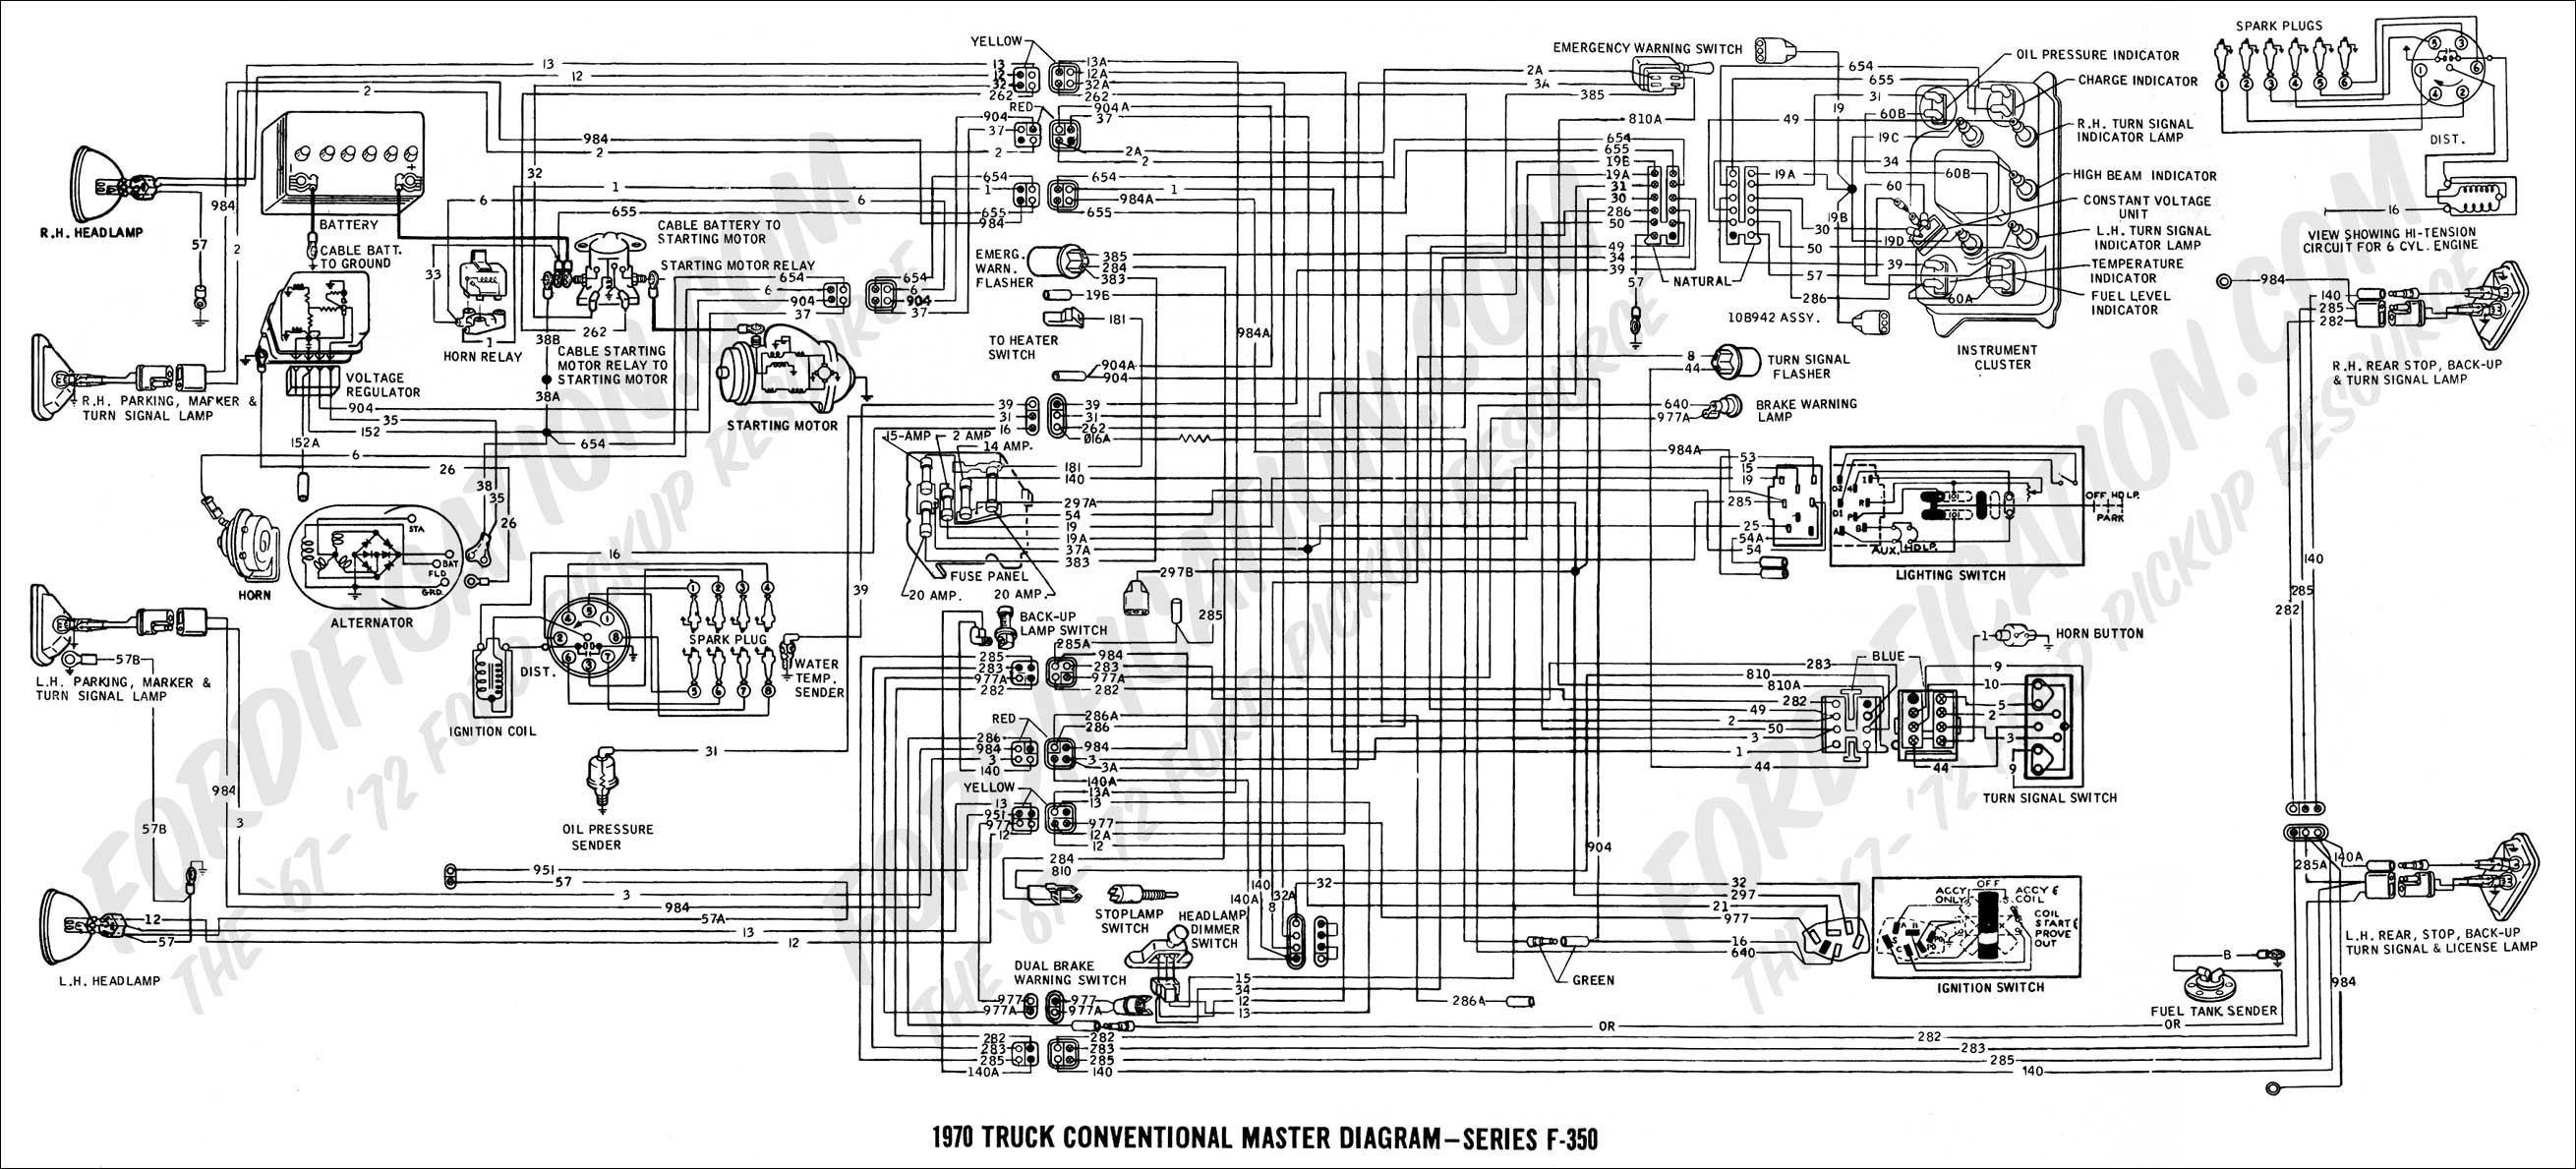 Honda Rebel 250 Wiring Diagram V Star 250 Wiring Diagram Another Blog About Wiring Diagram • Of Honda Rebel 250 Wiring Diagram